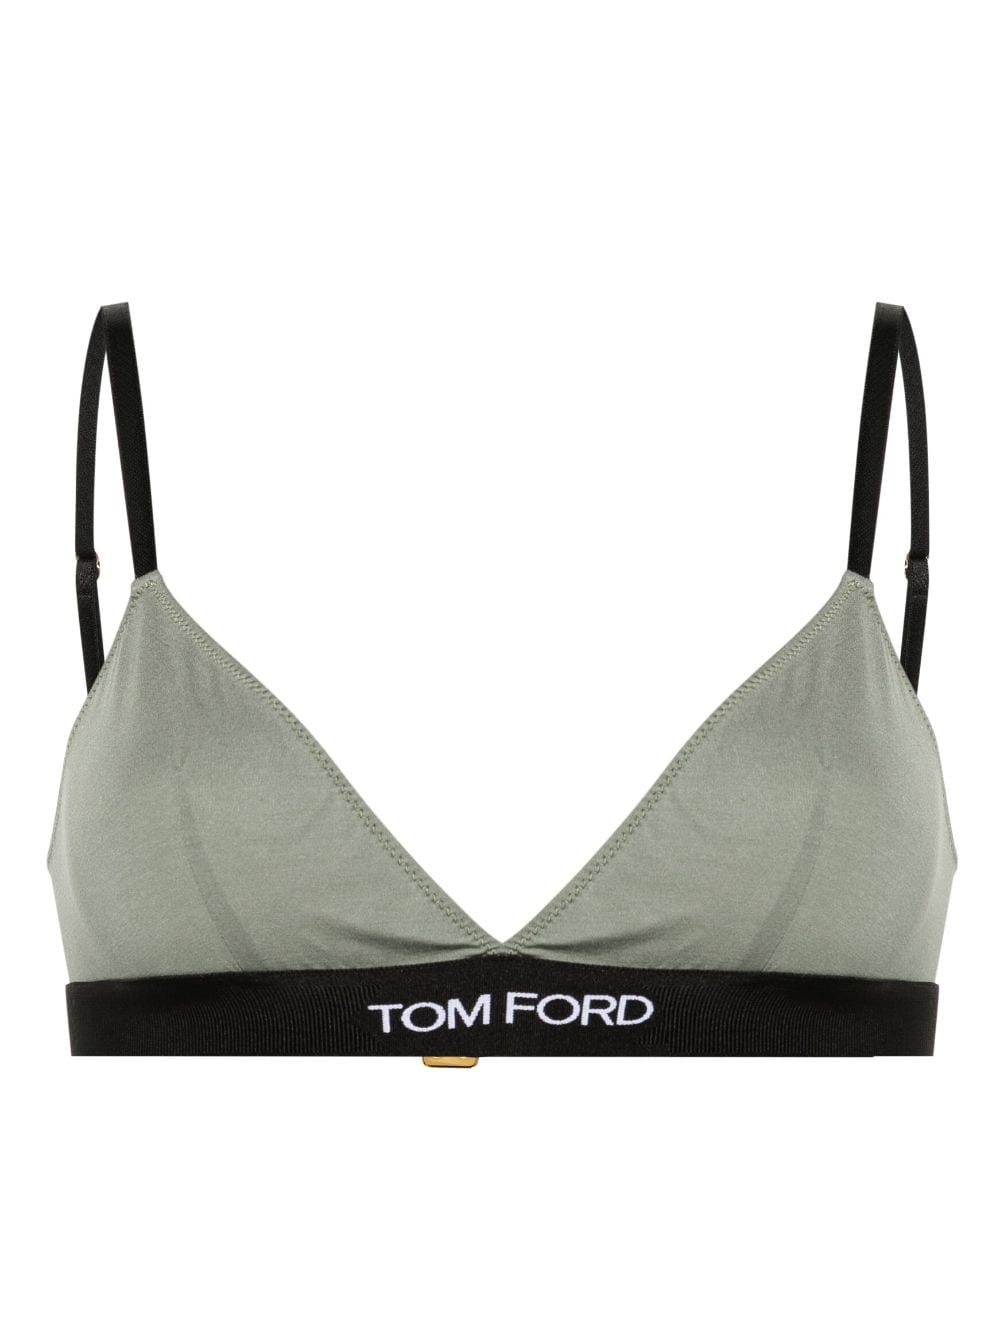 TOM FORD logo-underband triangle bra - Green von TOM FORD